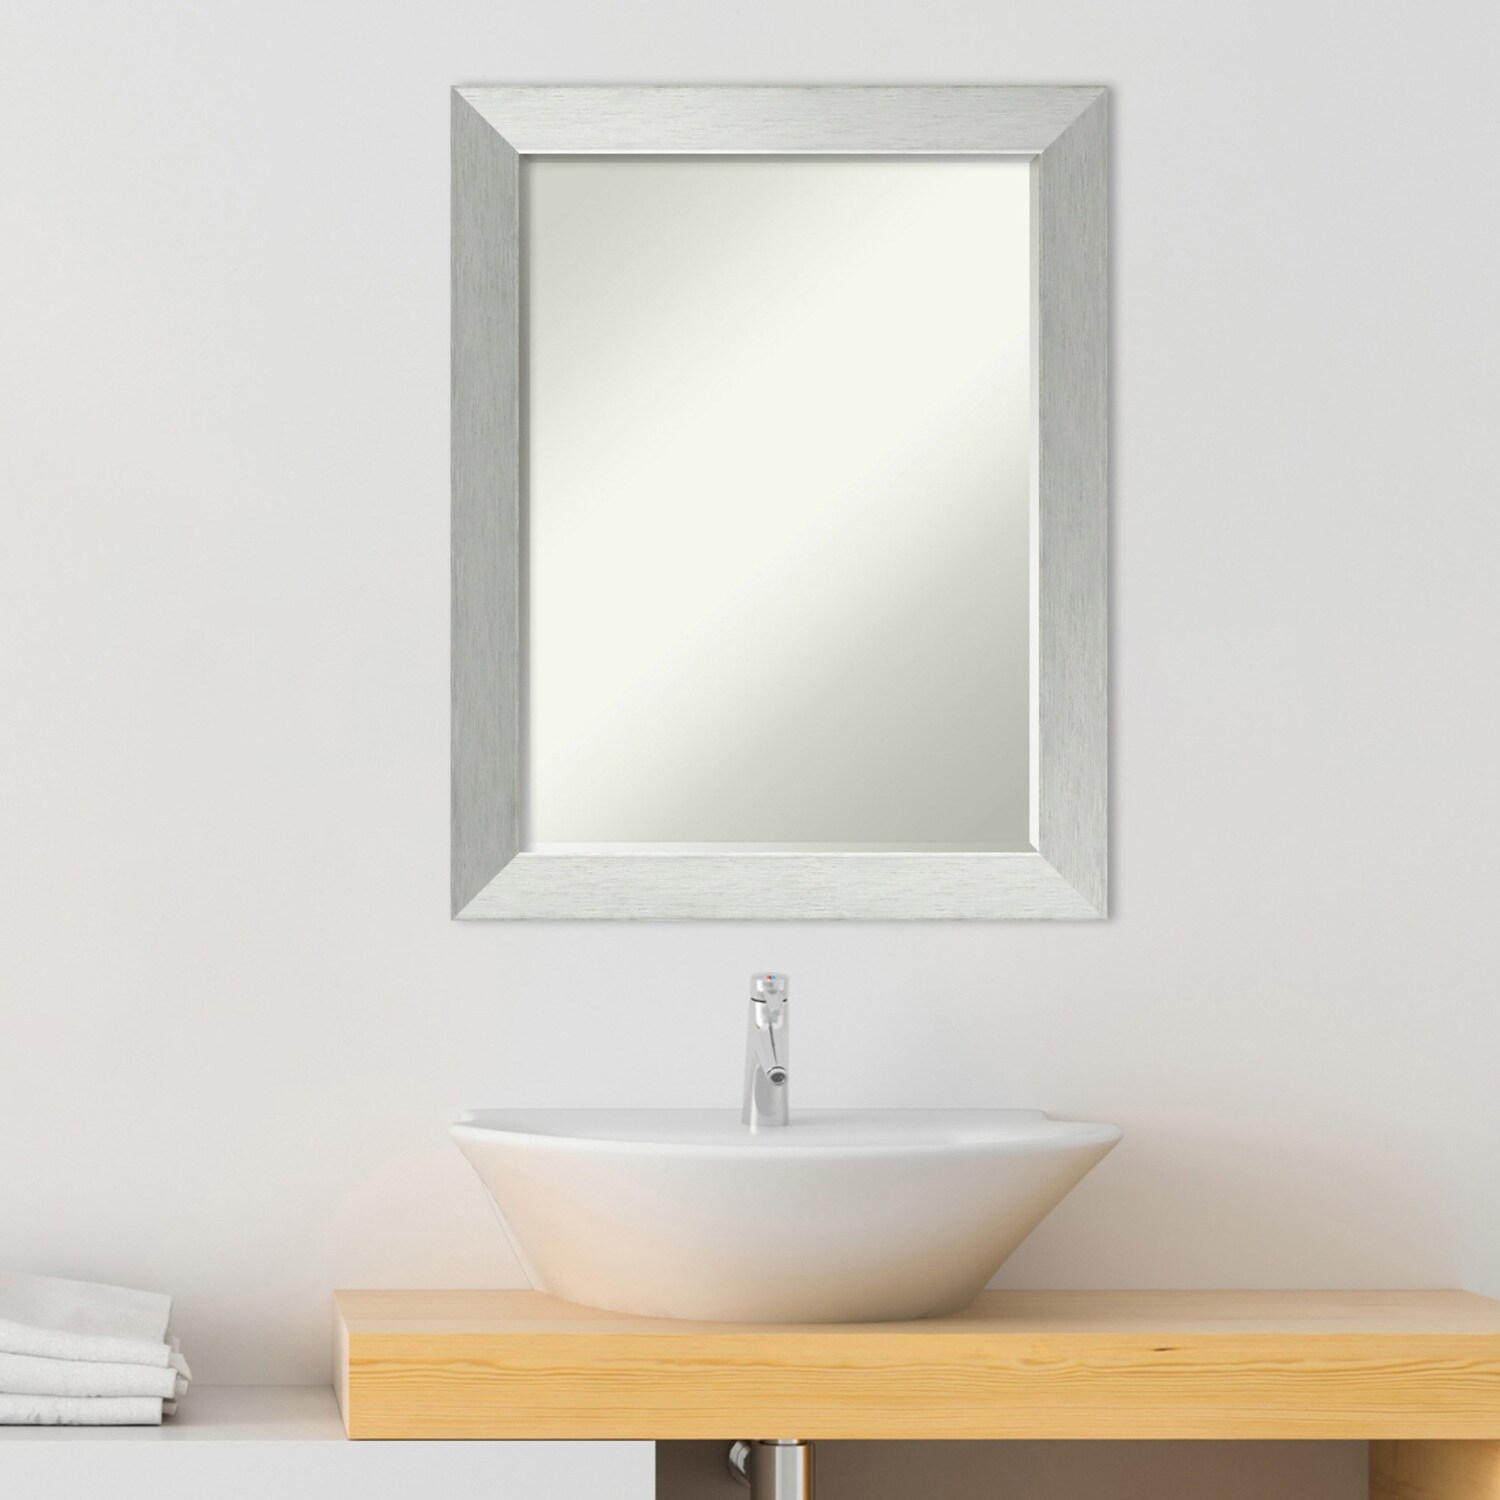 Petite Bevel Wood Bathroom Wall Mirror - Brushed Sterling Silver Frame - Brushed Sterling Silver - 22 x 28 in